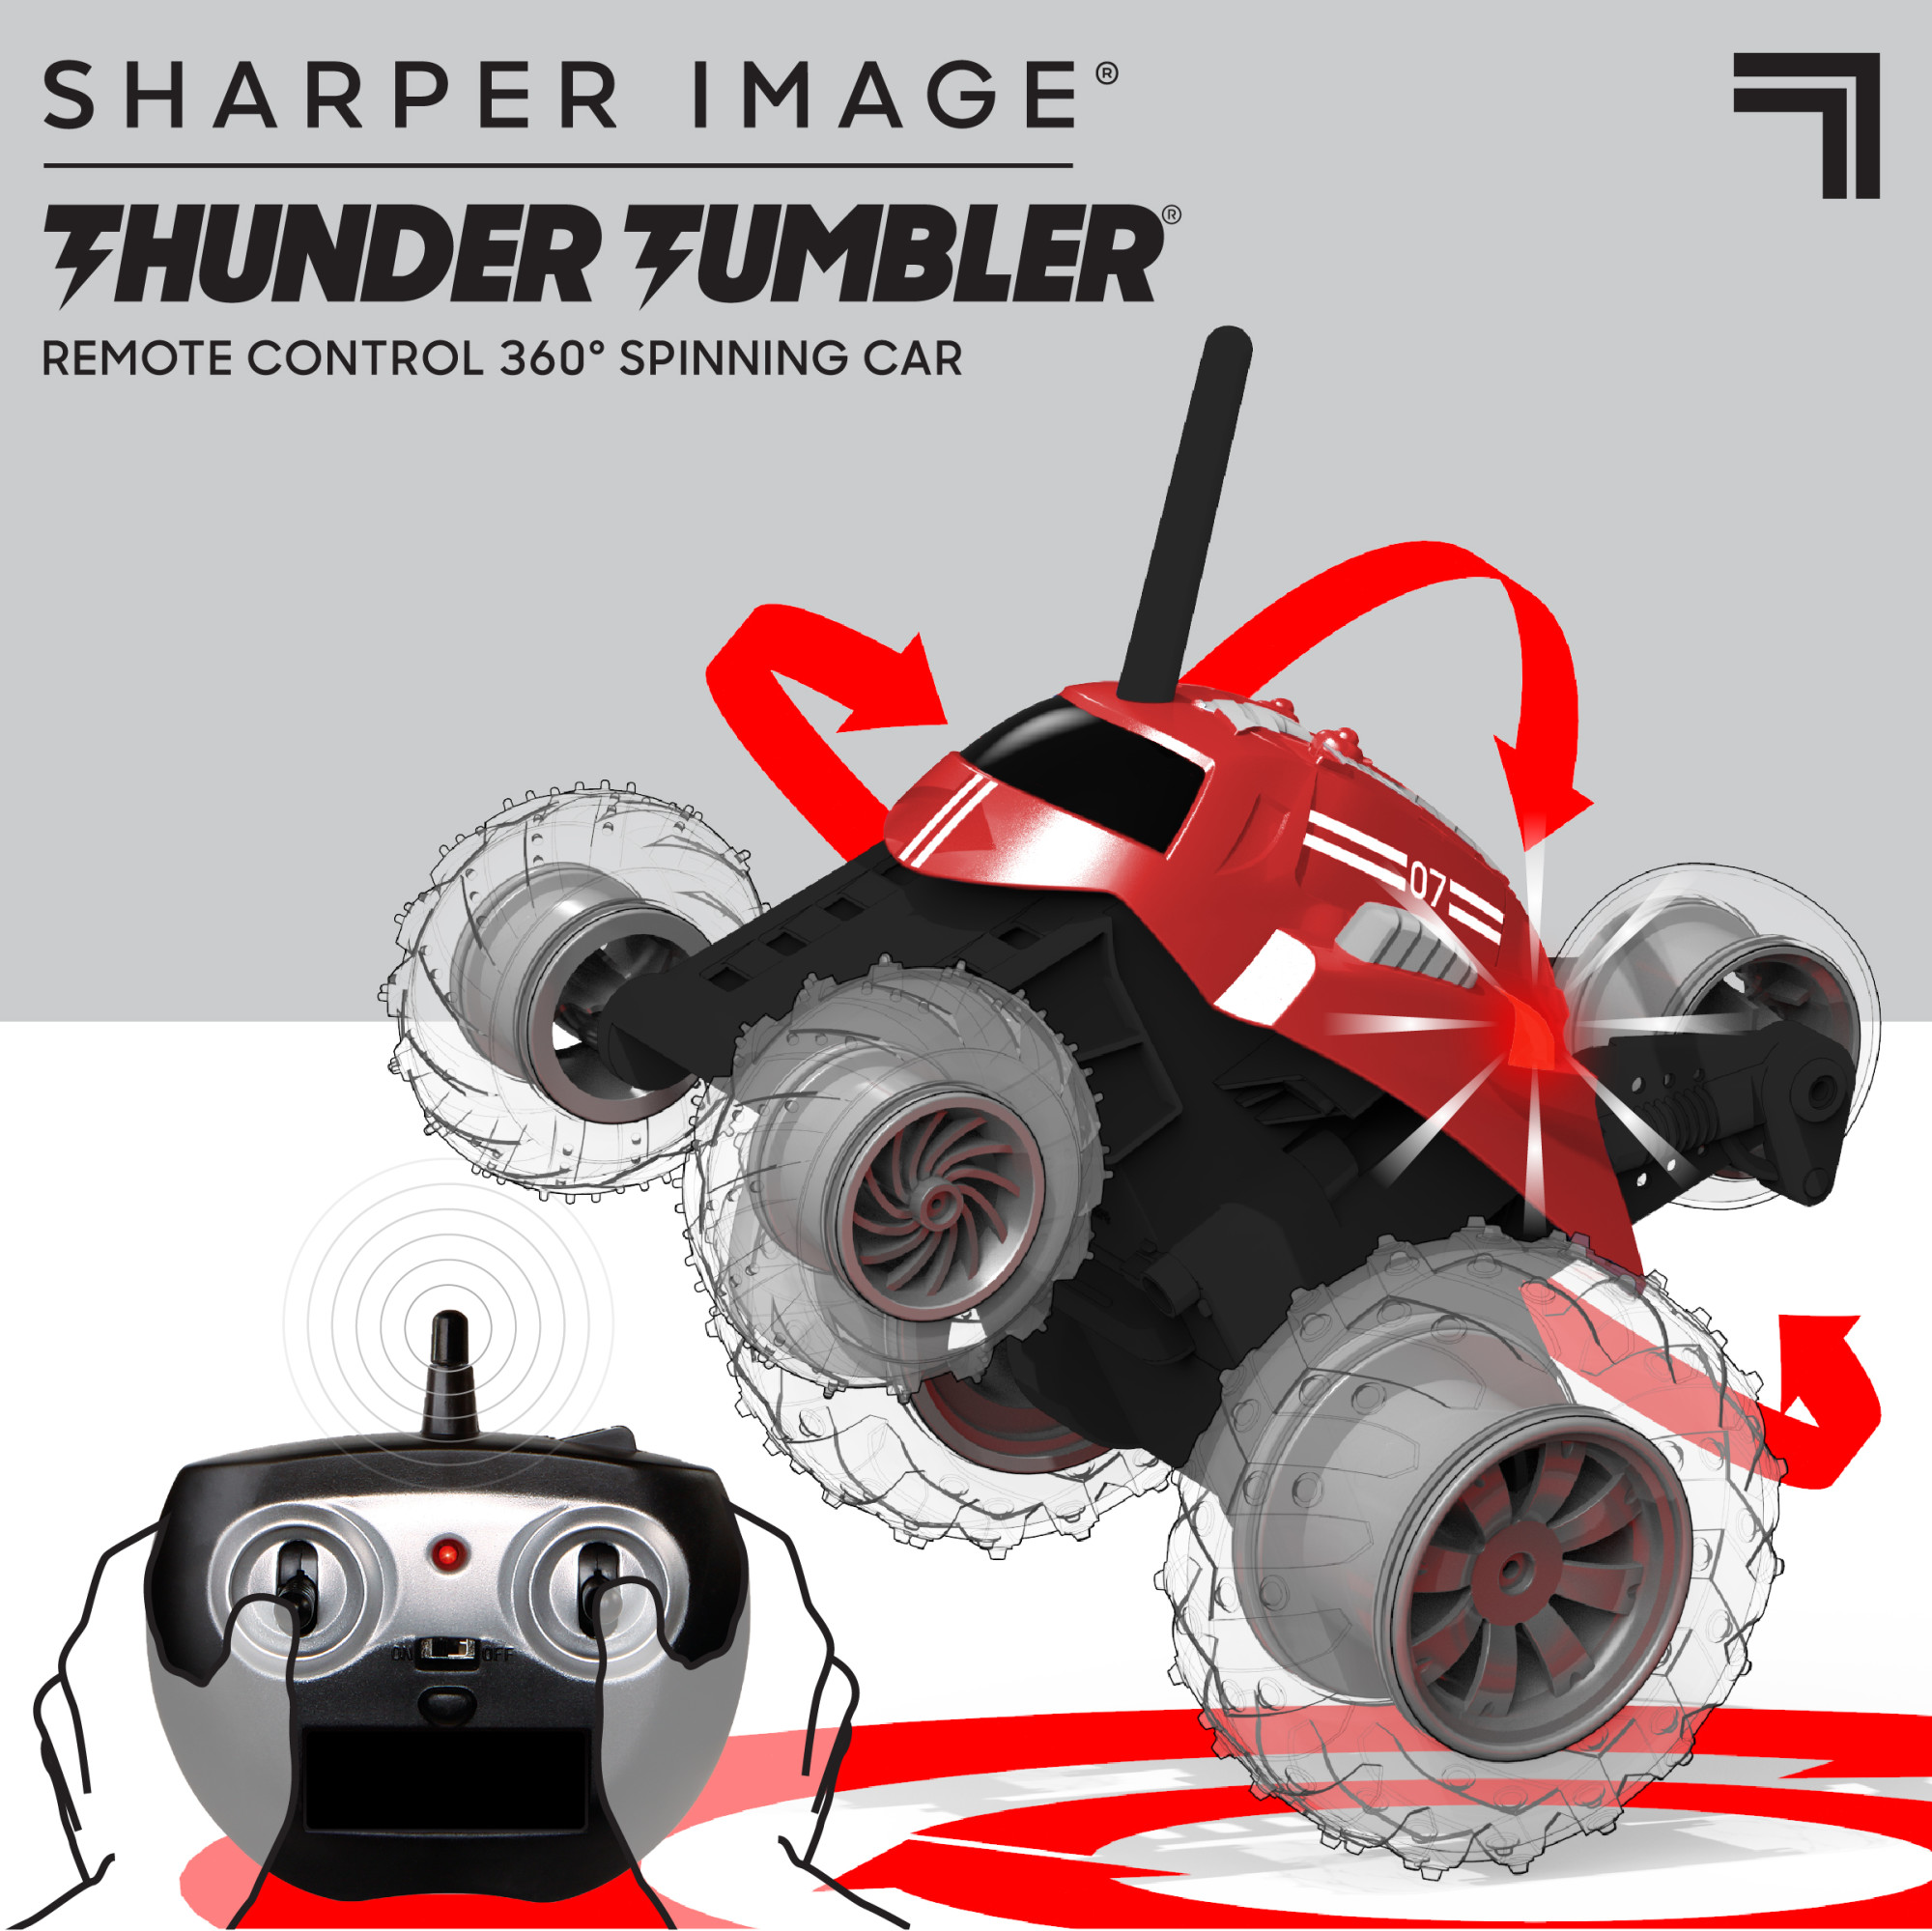 Sharper Image® Thunder Tumbler Remote Control 360 Spinning Car, Red, 2 pcs - image 3 of 16